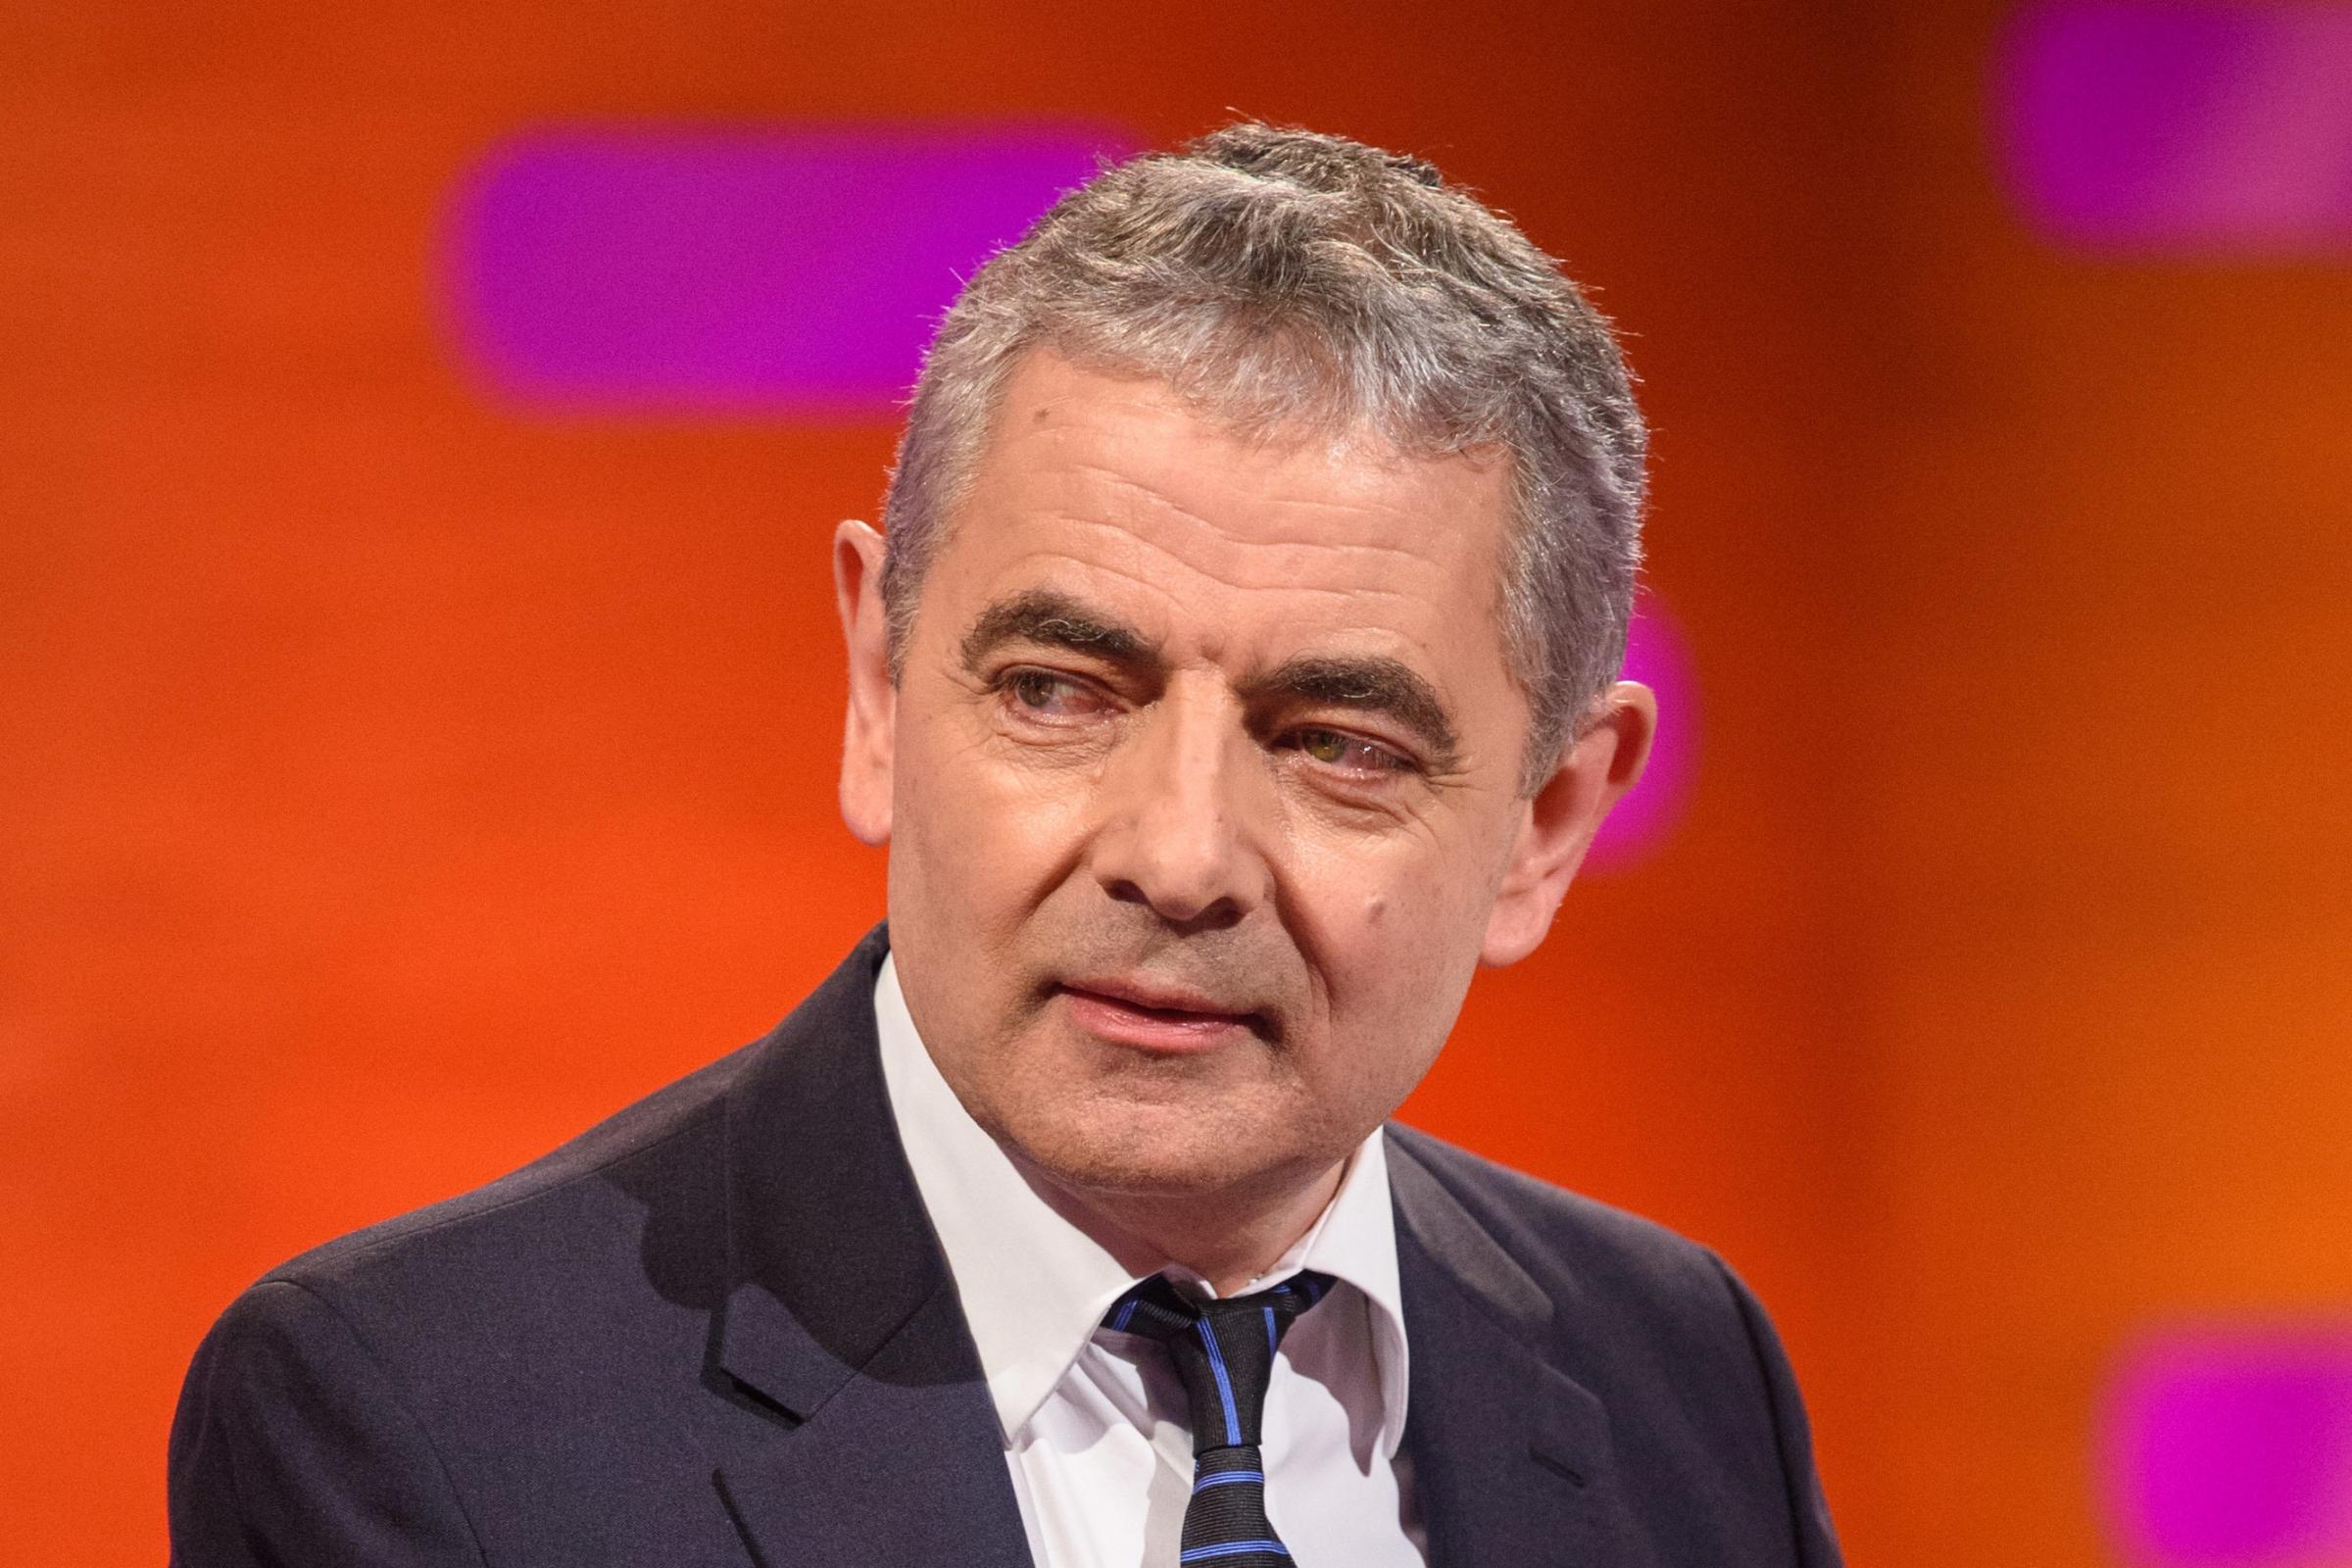 Rowan Atkinson to play three vicars in new Radio 4 comedy